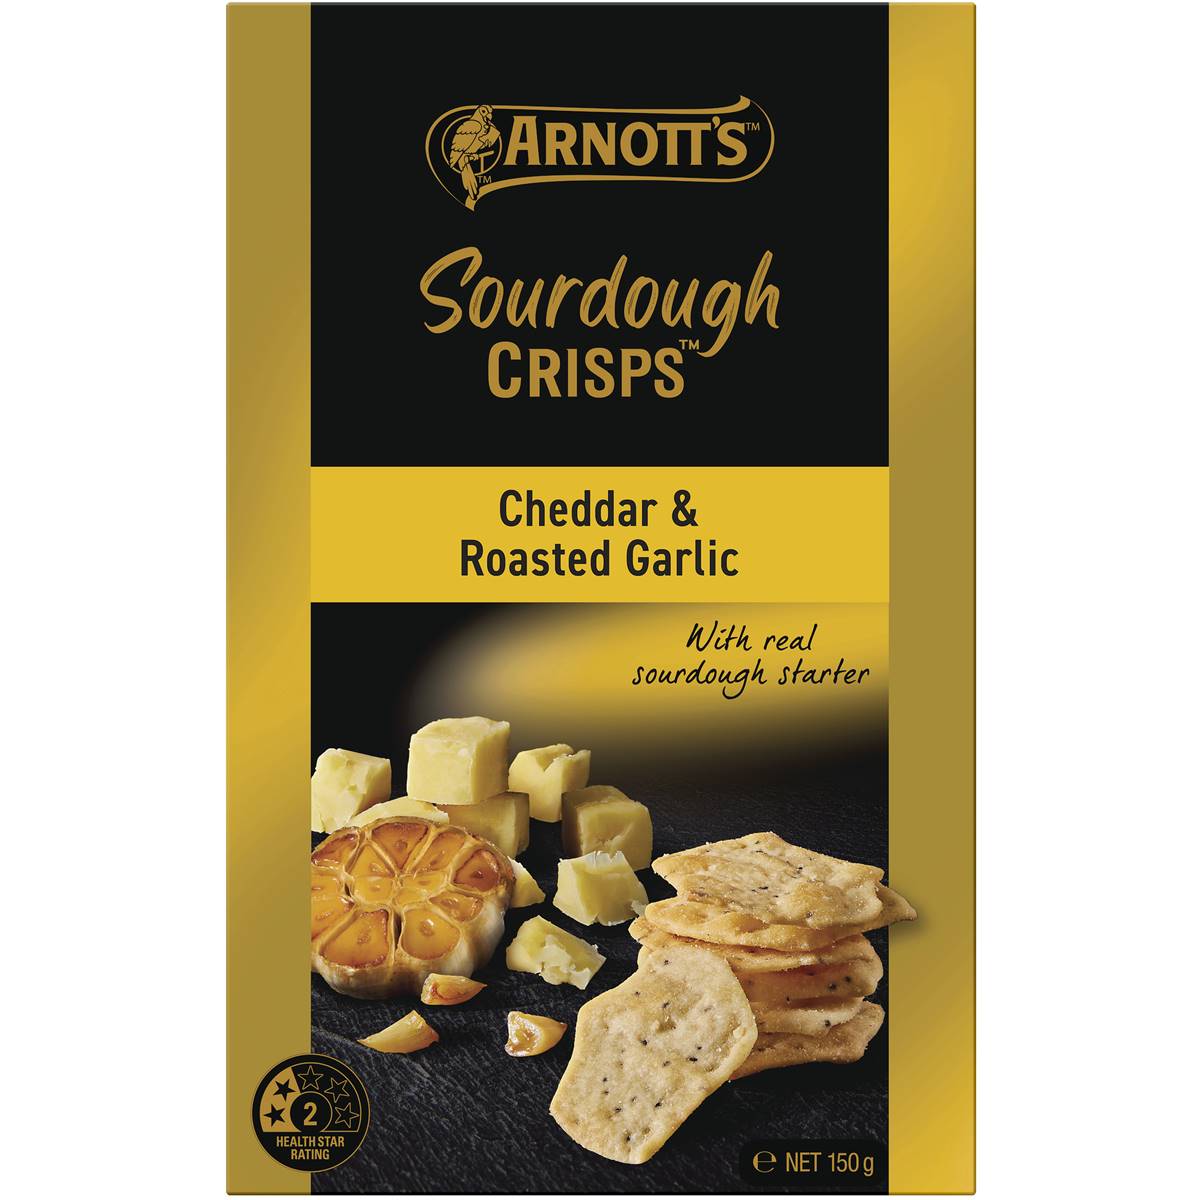 Arnotts Sourdough Crisps Cheddar & Roasted Garlic